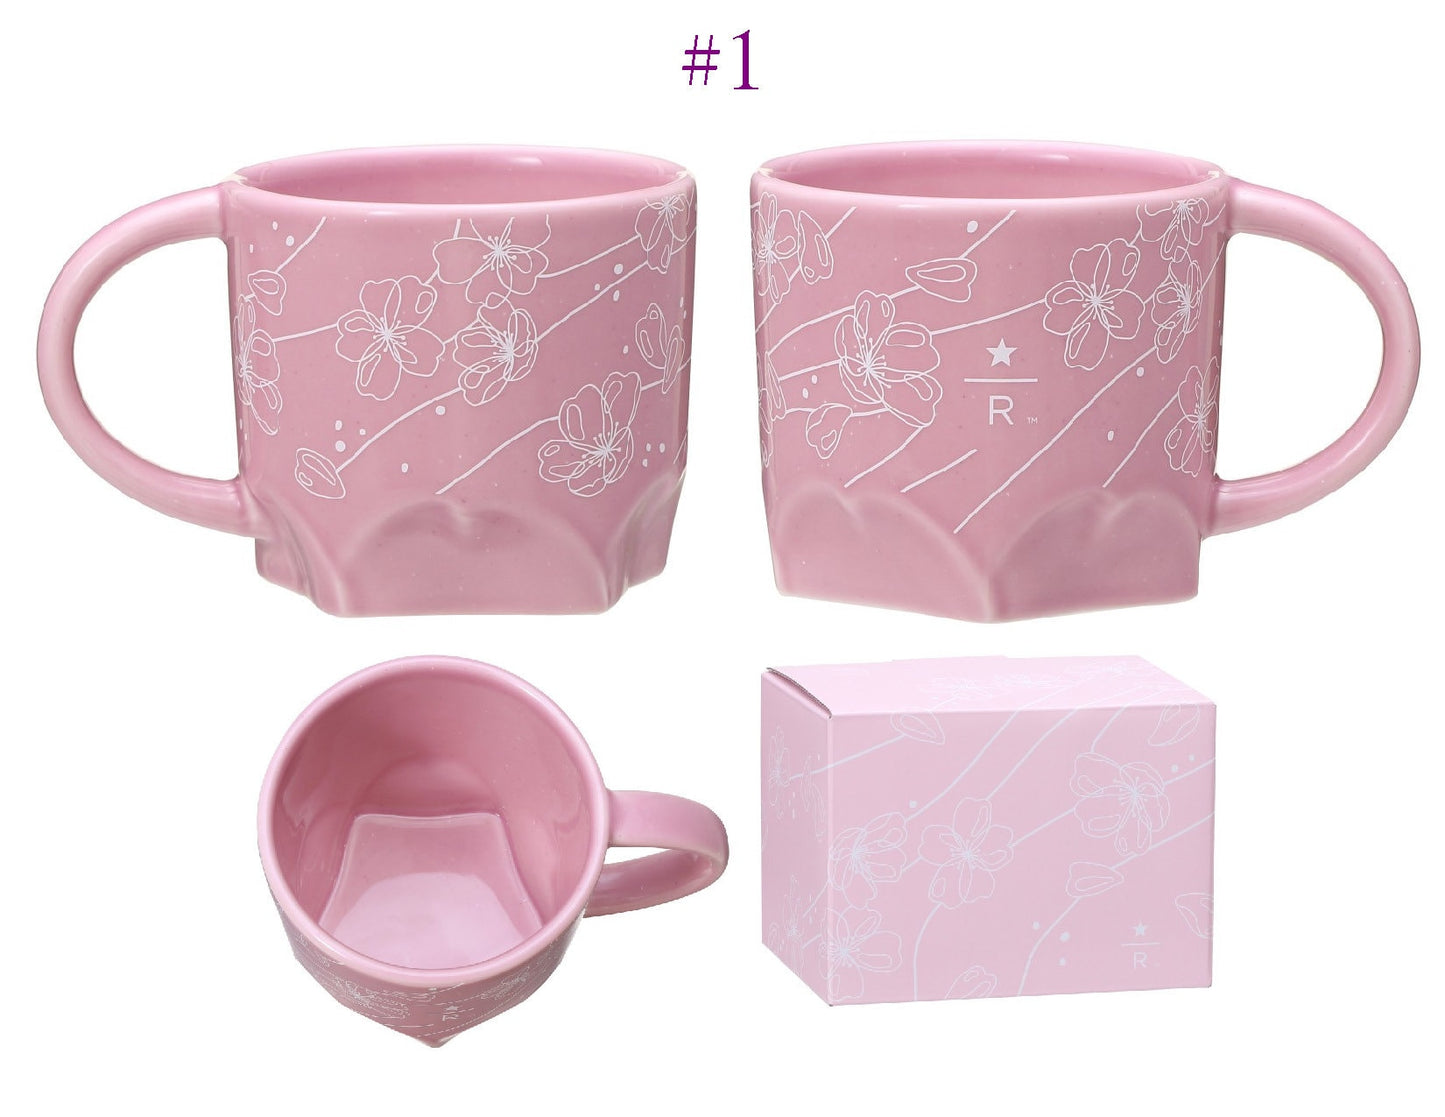 Toyko Starbucks Reserve® Roastery Ceramic/Glass Sakura Mugs 2023, 12oz